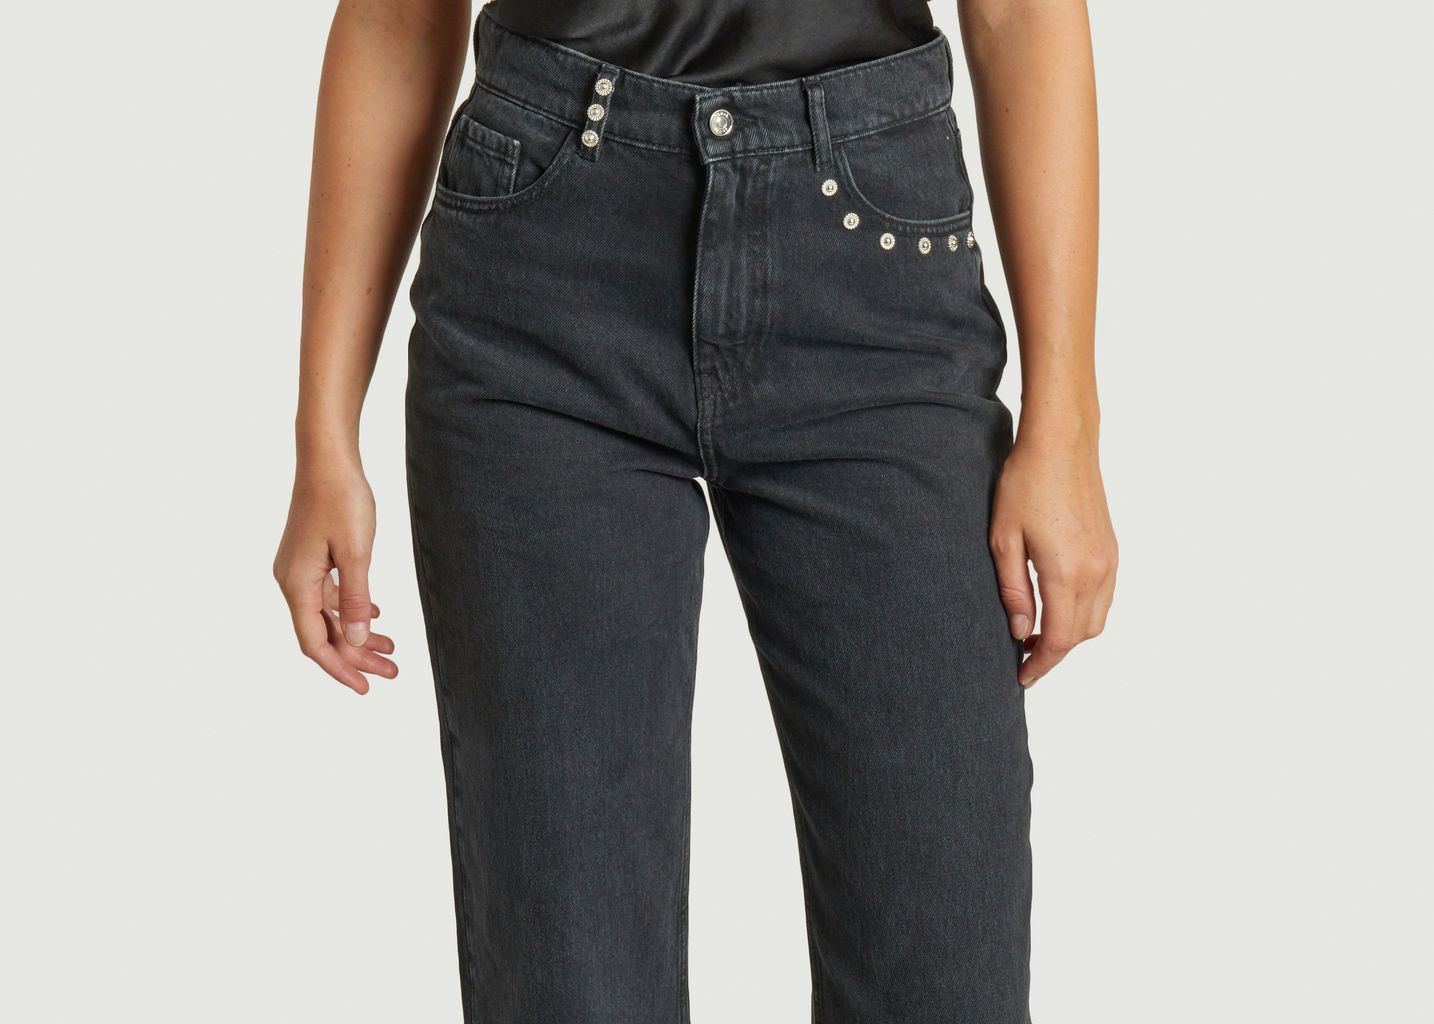 Hatcha jeans  - Ba&sh